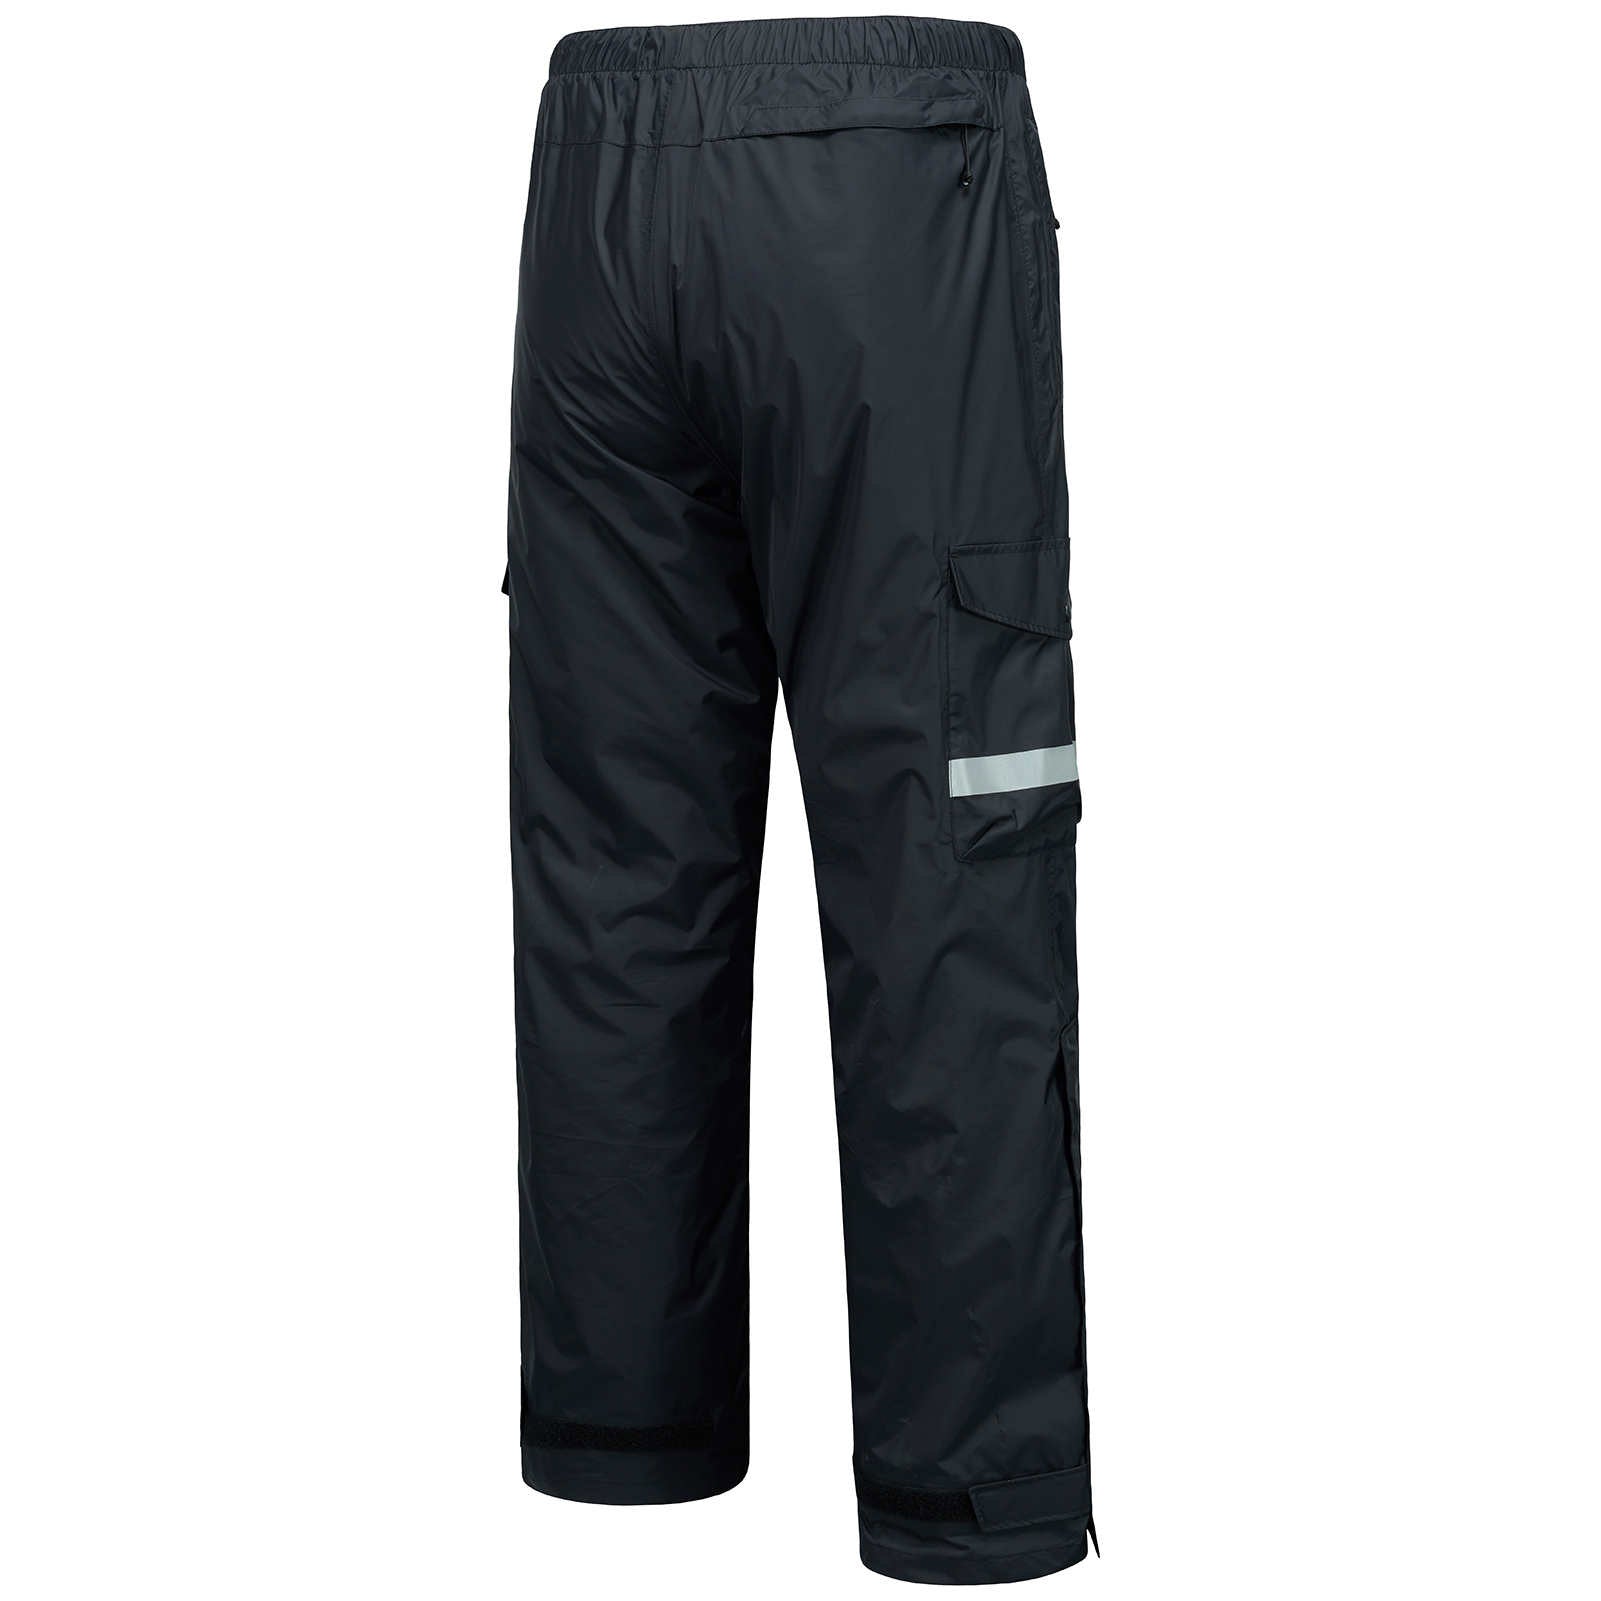 Men’s Complete Breathable Waterproof Rain Pants with 1/2 Zip Legs, Black / 2XL (44-46)W x 34L